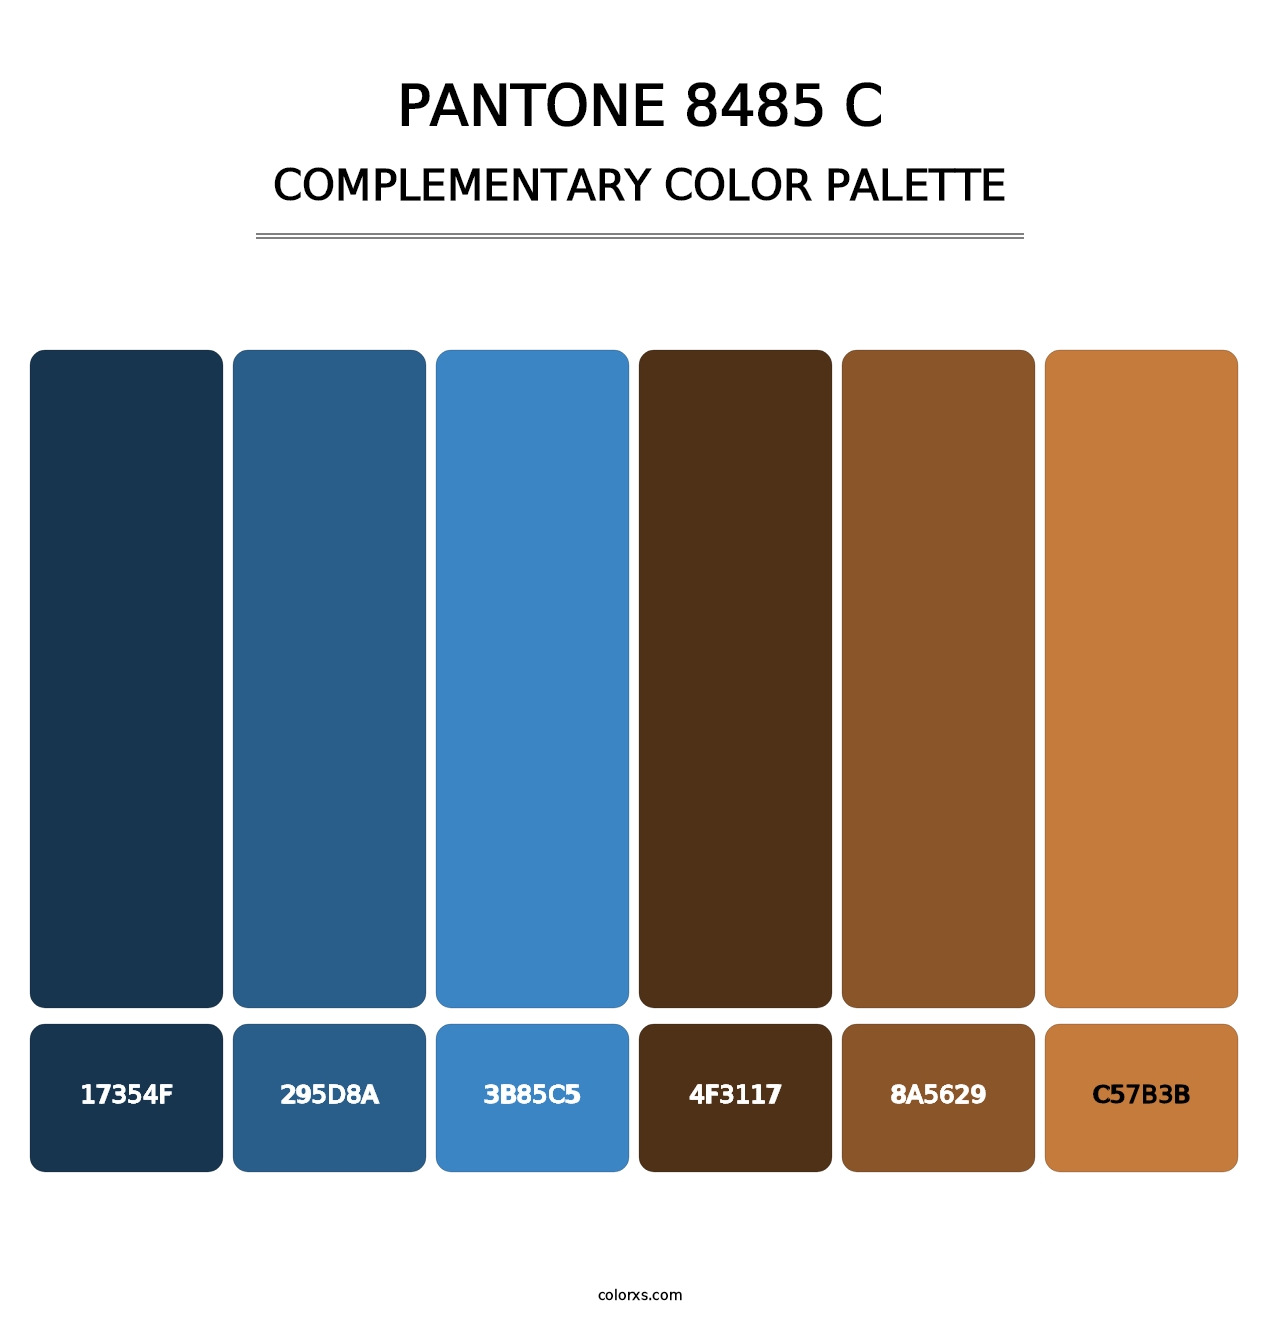 PANTONE 8485 C - Complementary Color Palette